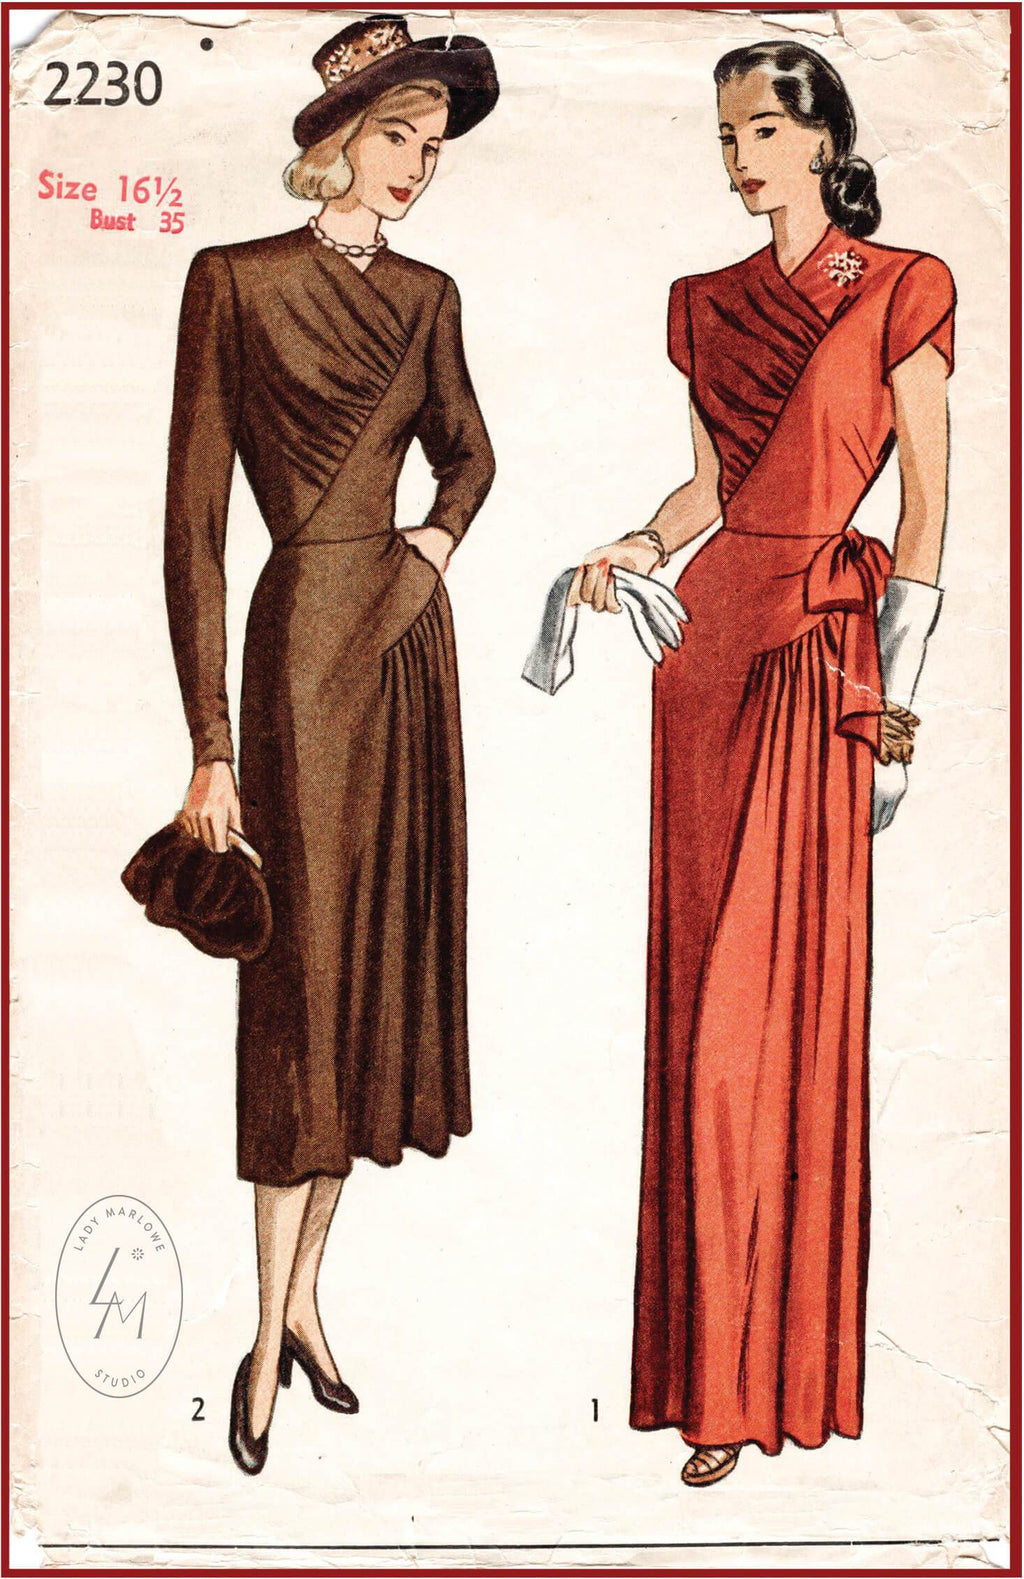 vintage day dress